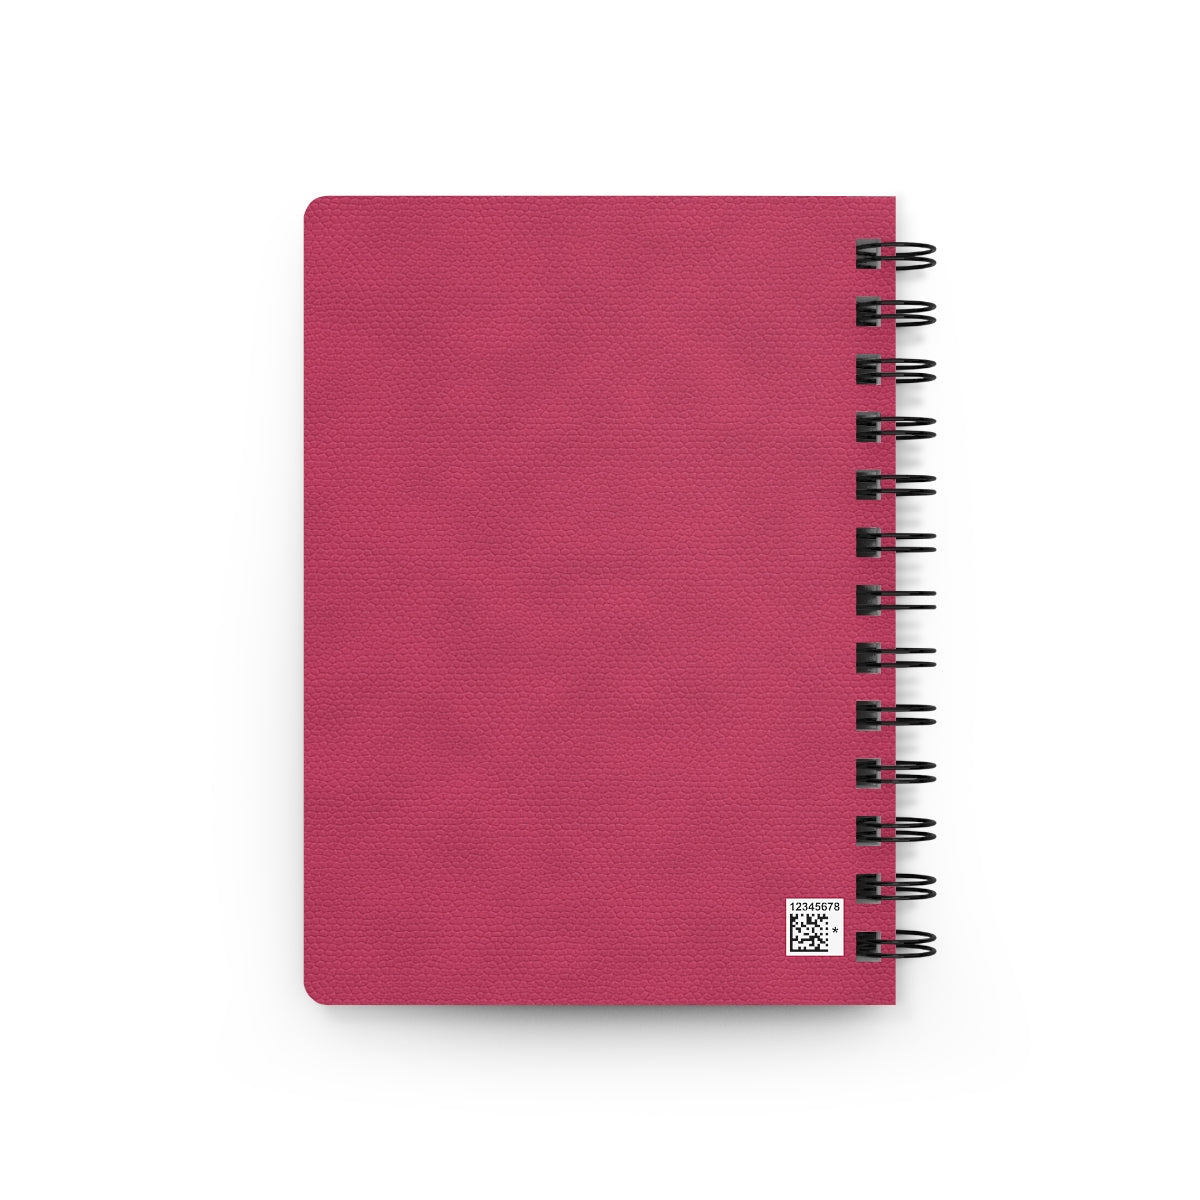 Pink Leather Print Spiral Bound Journal